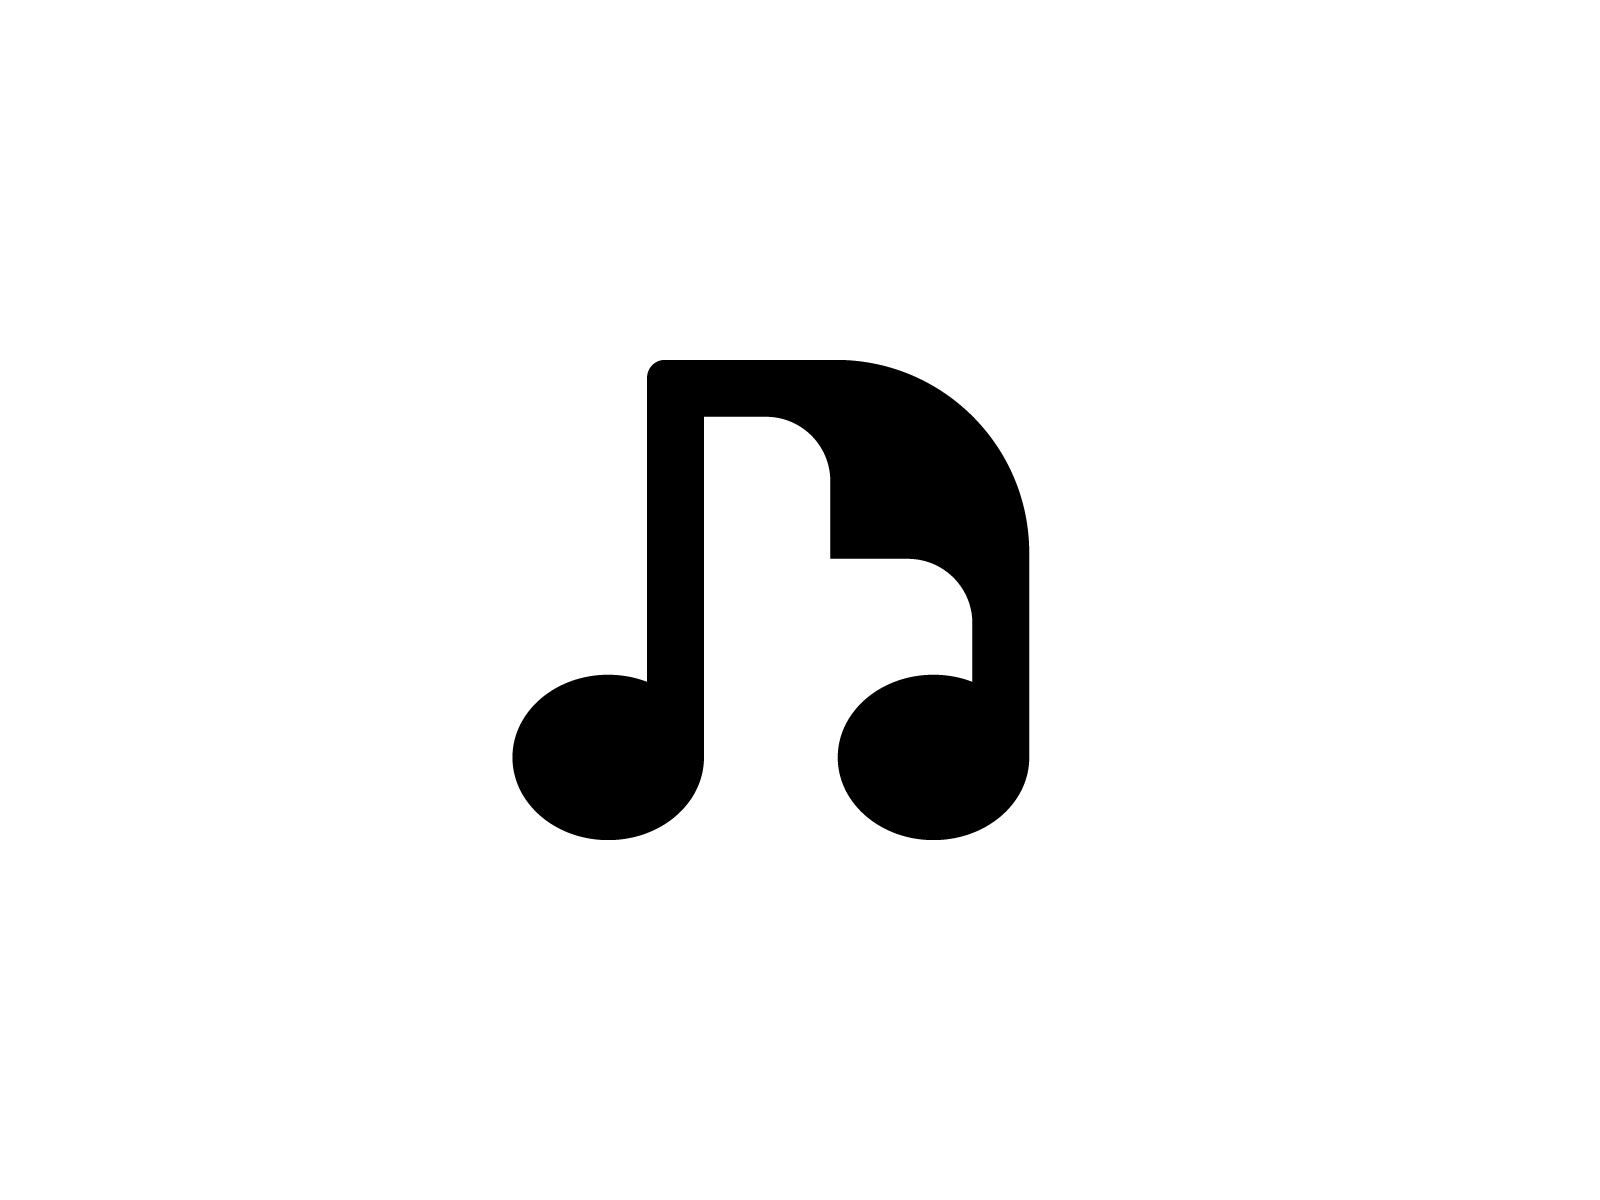 logo pop music